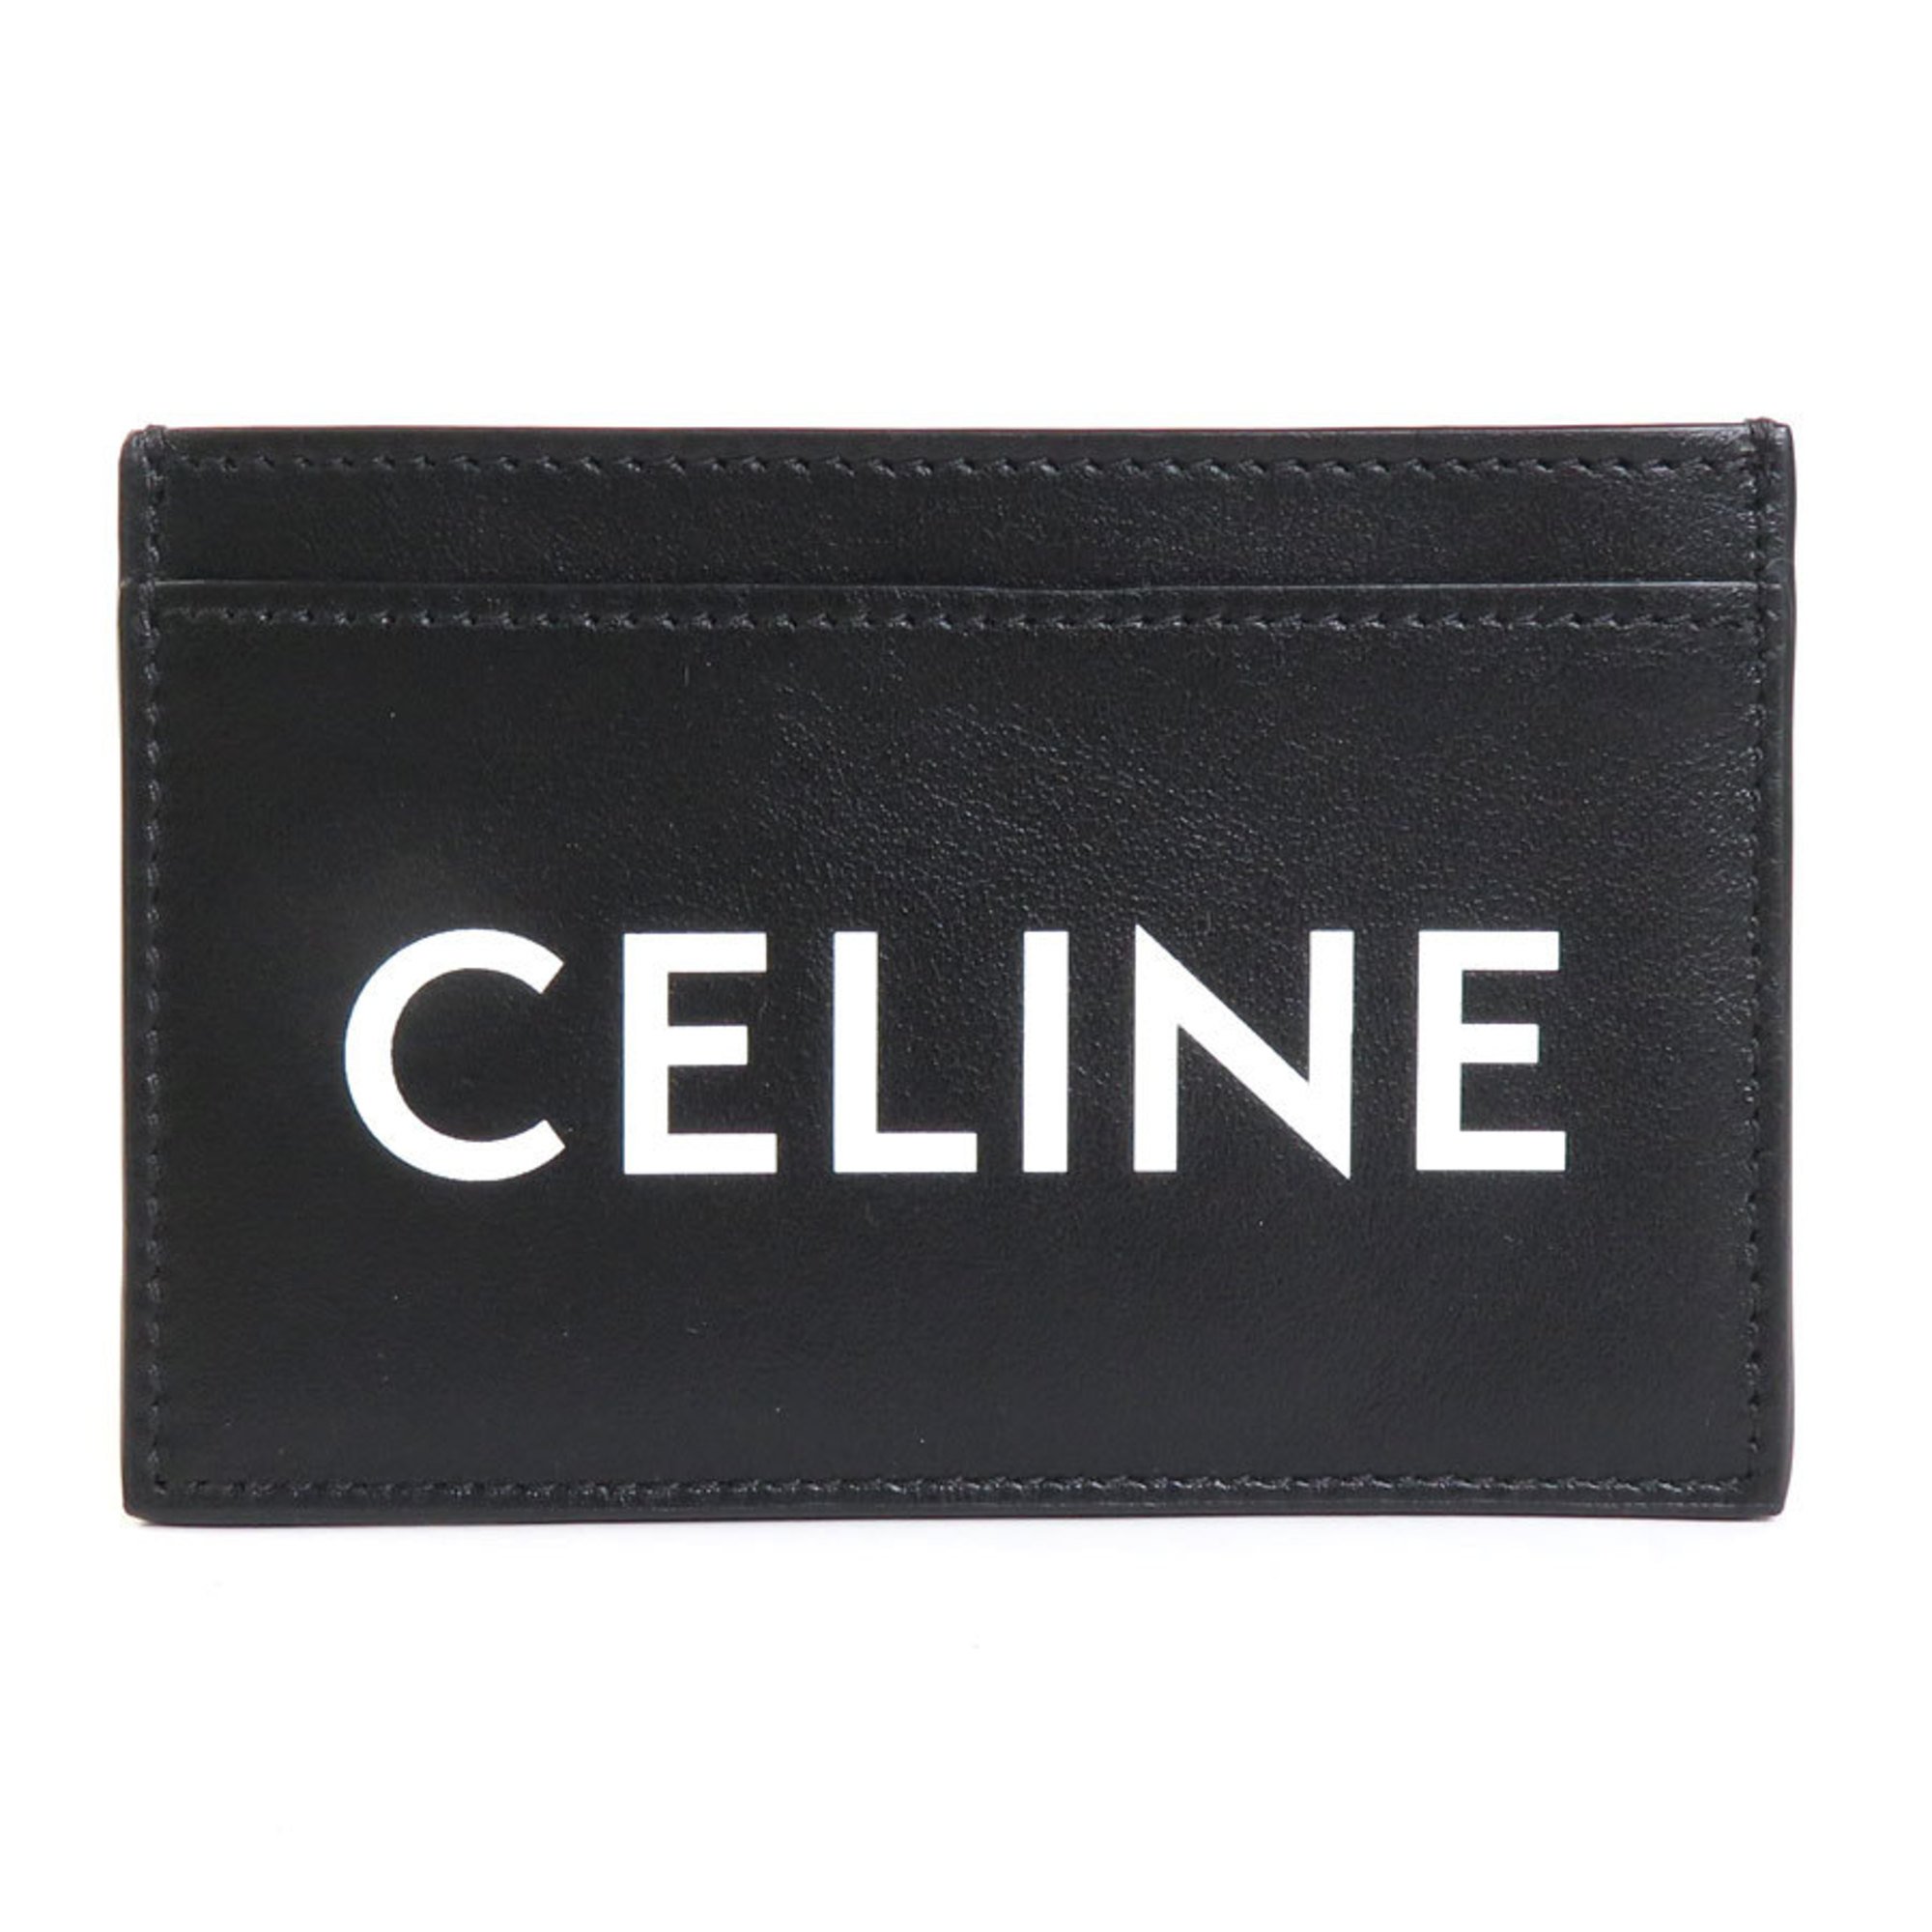 Celine CELINE Card Case Pass Leather Black x White Unisex